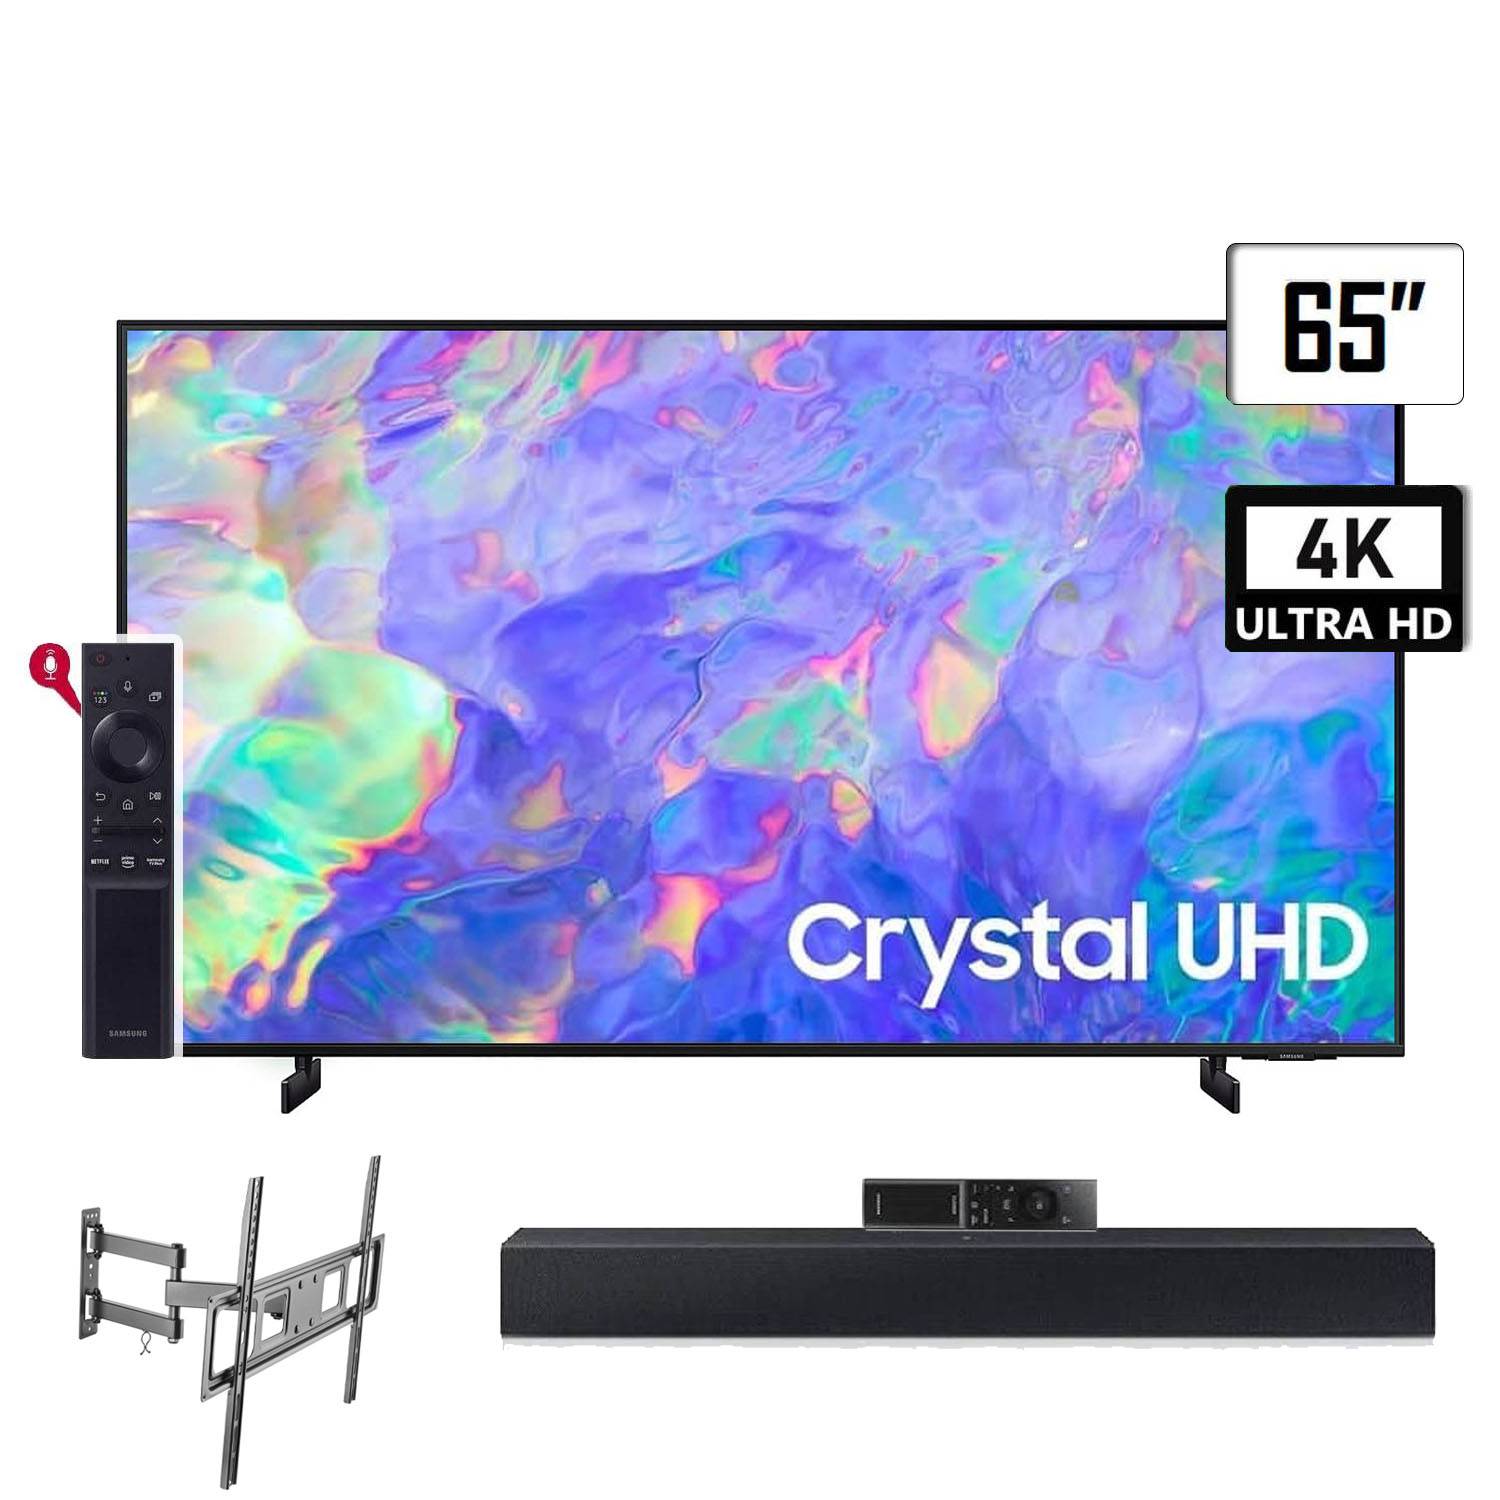 Televisor Samsung Smart TV 65 Crystal UHD 4K UN65CU8000GXPE (Nuevo)